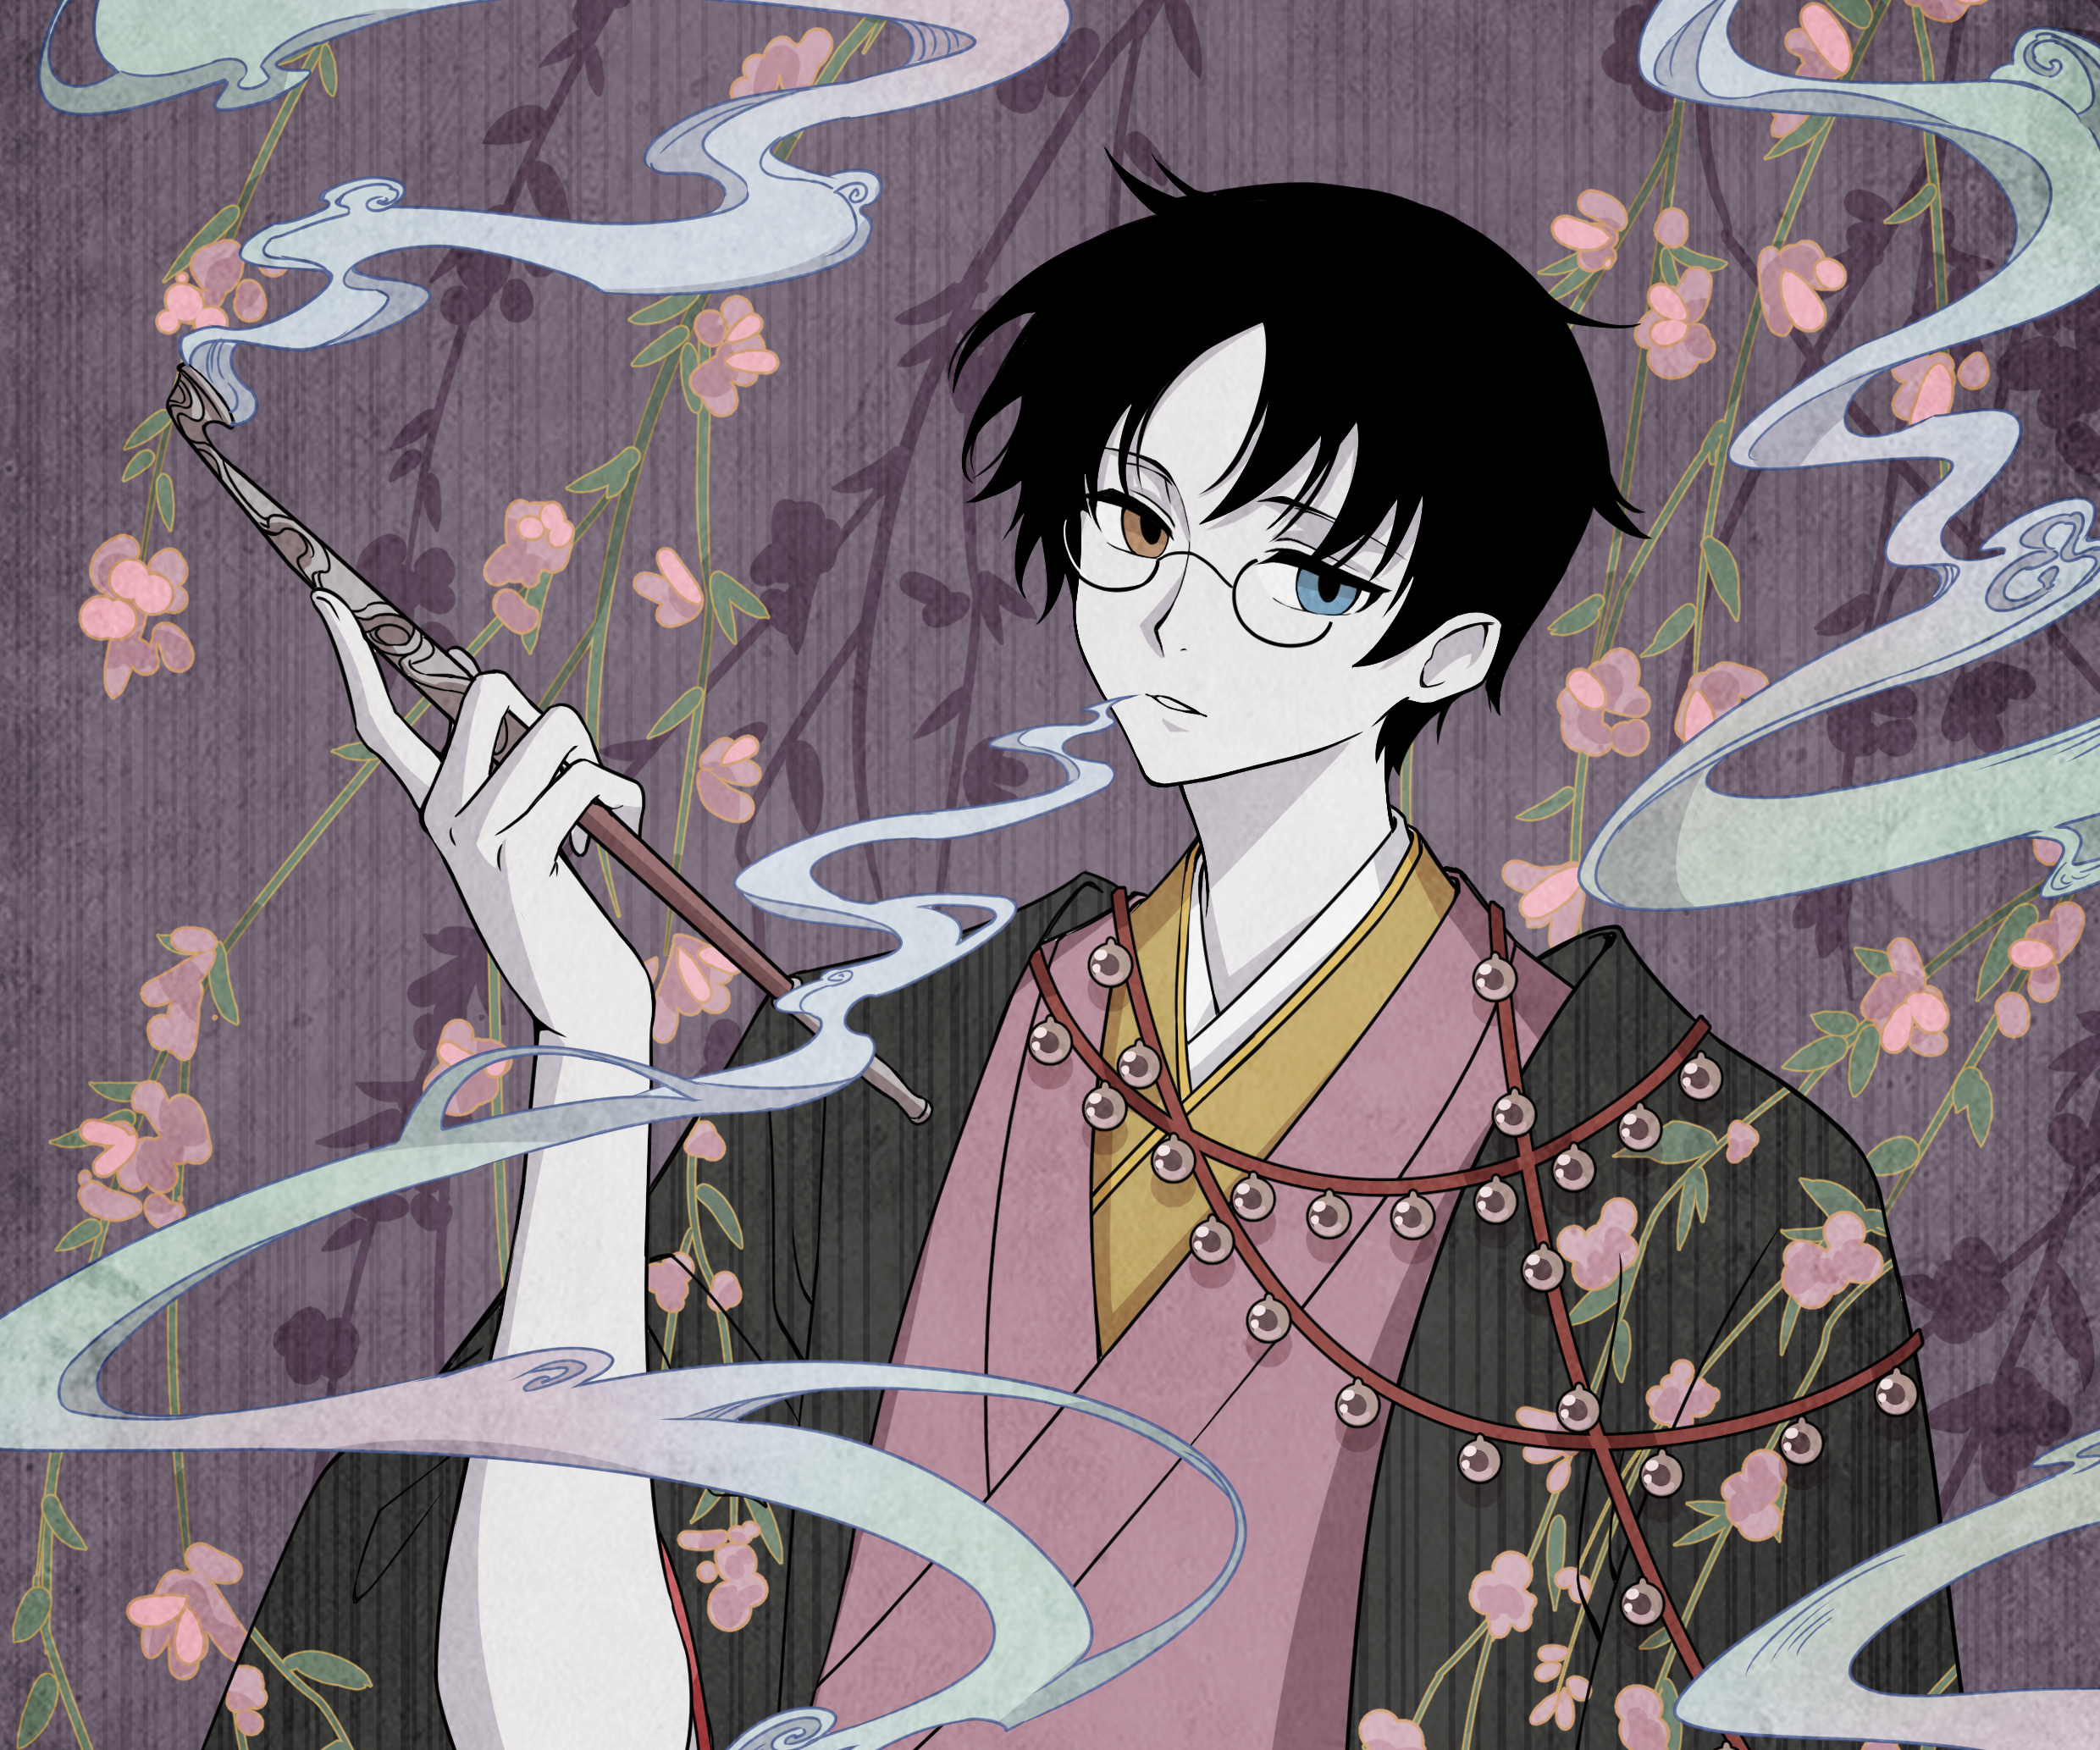 Anime 2480x2067 xxxHOLiC Watanuki Kimihiro anime boys heterochromia glasses smoking short hair looking at viewer kimono flowers